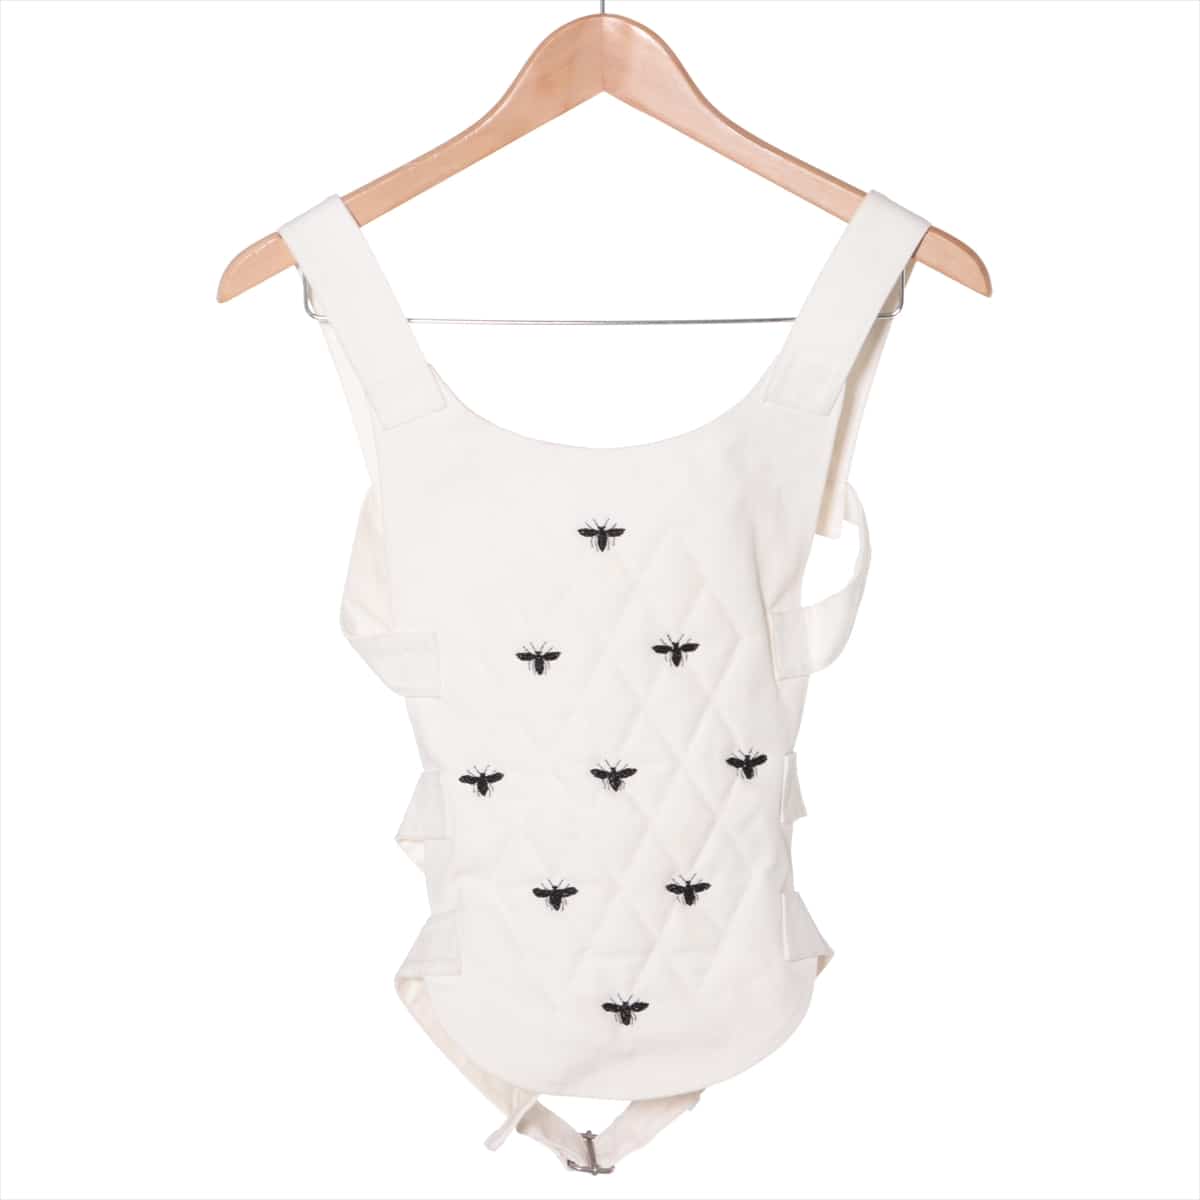 Christian Dior Cotton Vest XS Ladies' White  Bee 7E27500Z1305